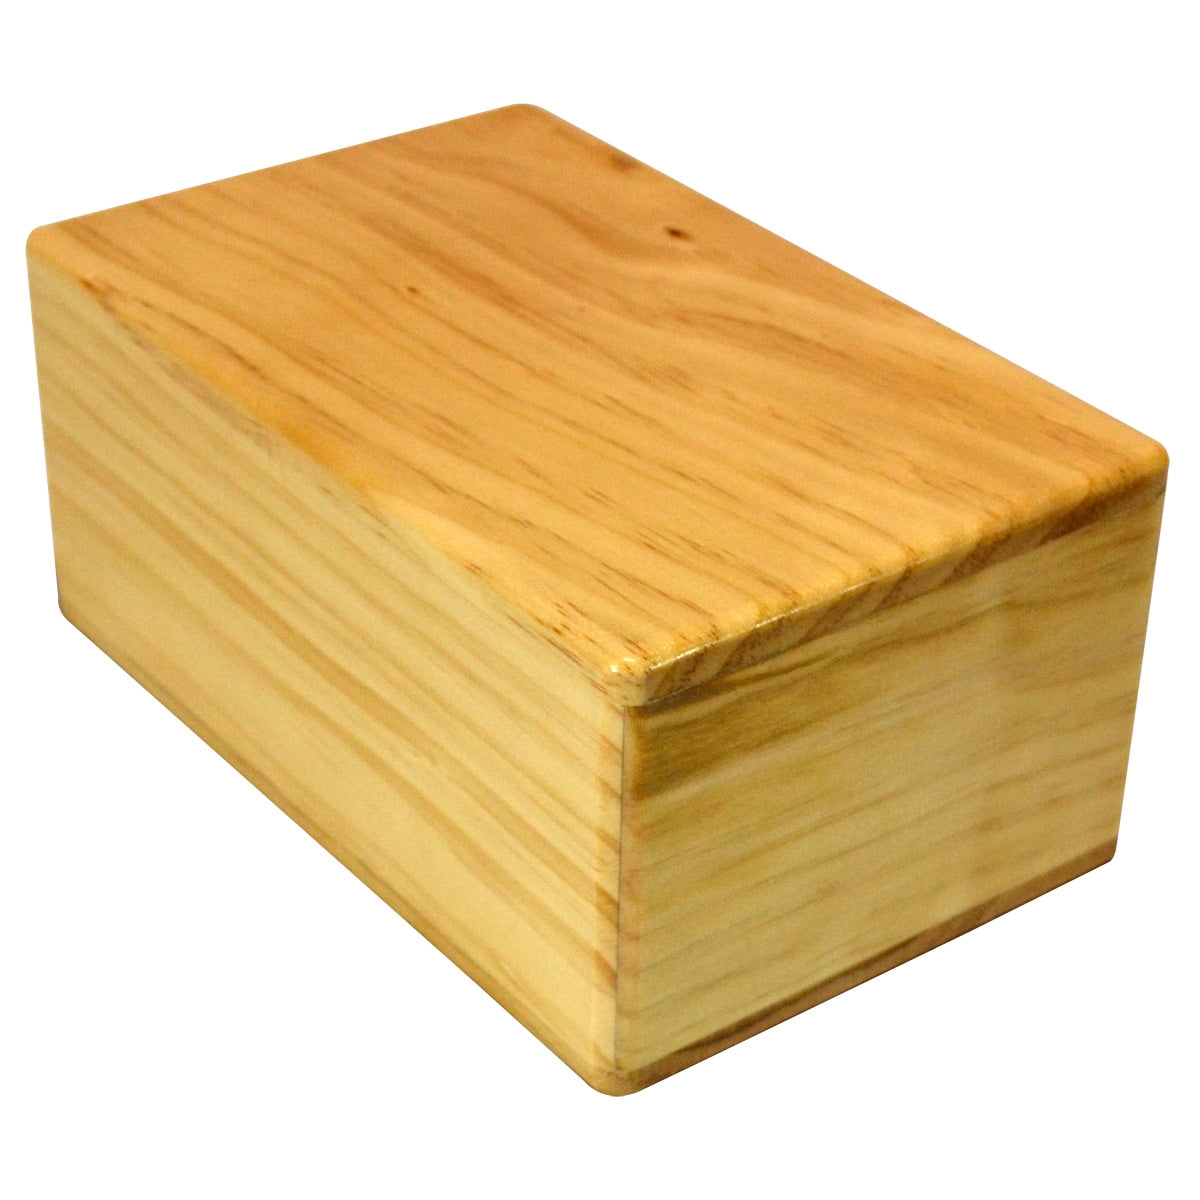 4'' New Zealand Pine Wood Yoga Block